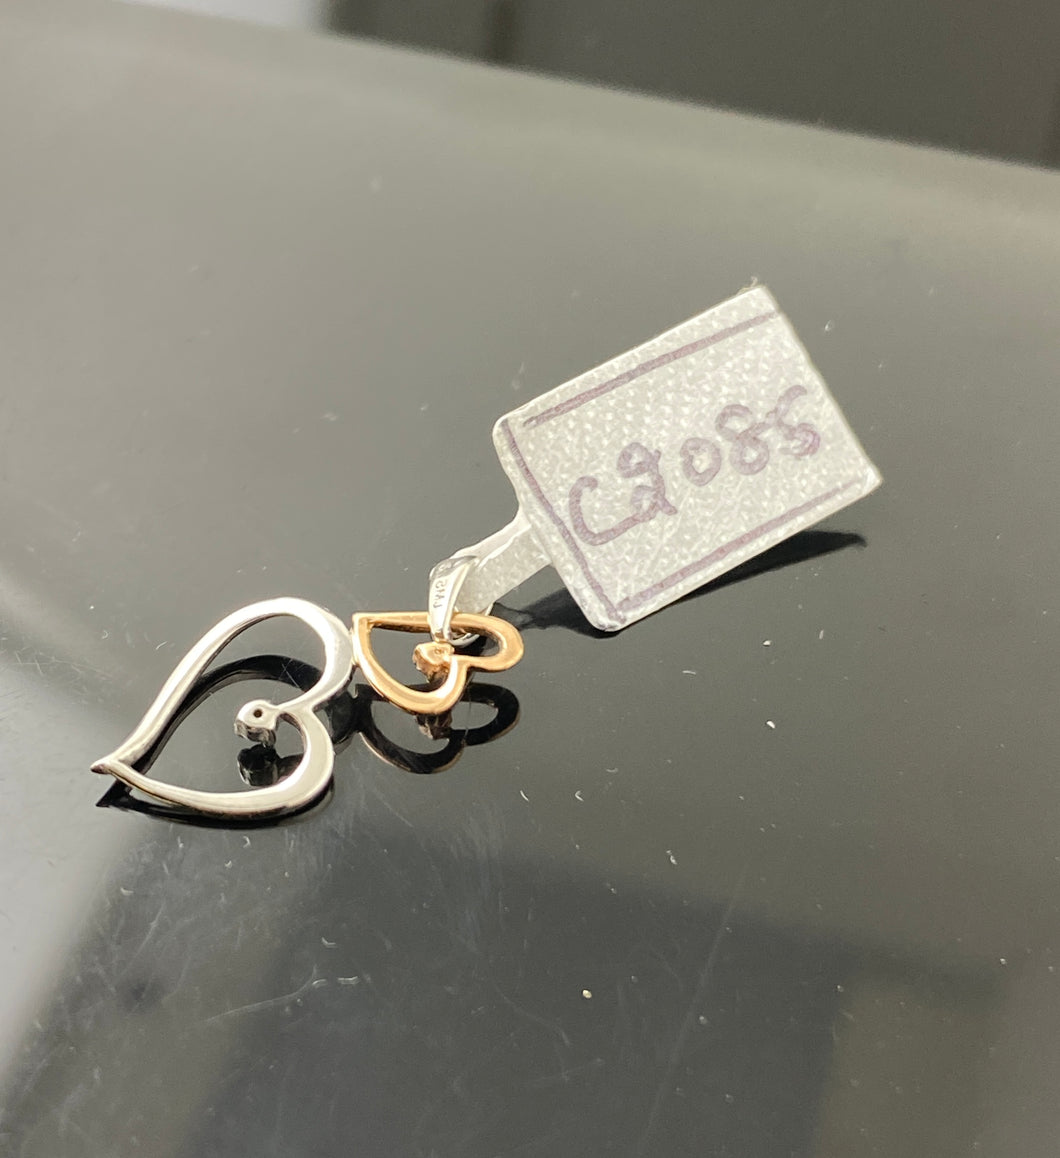 10k Solid Gold Simple Double Heart Pendant c2085 - Royal Dubai Jewellers